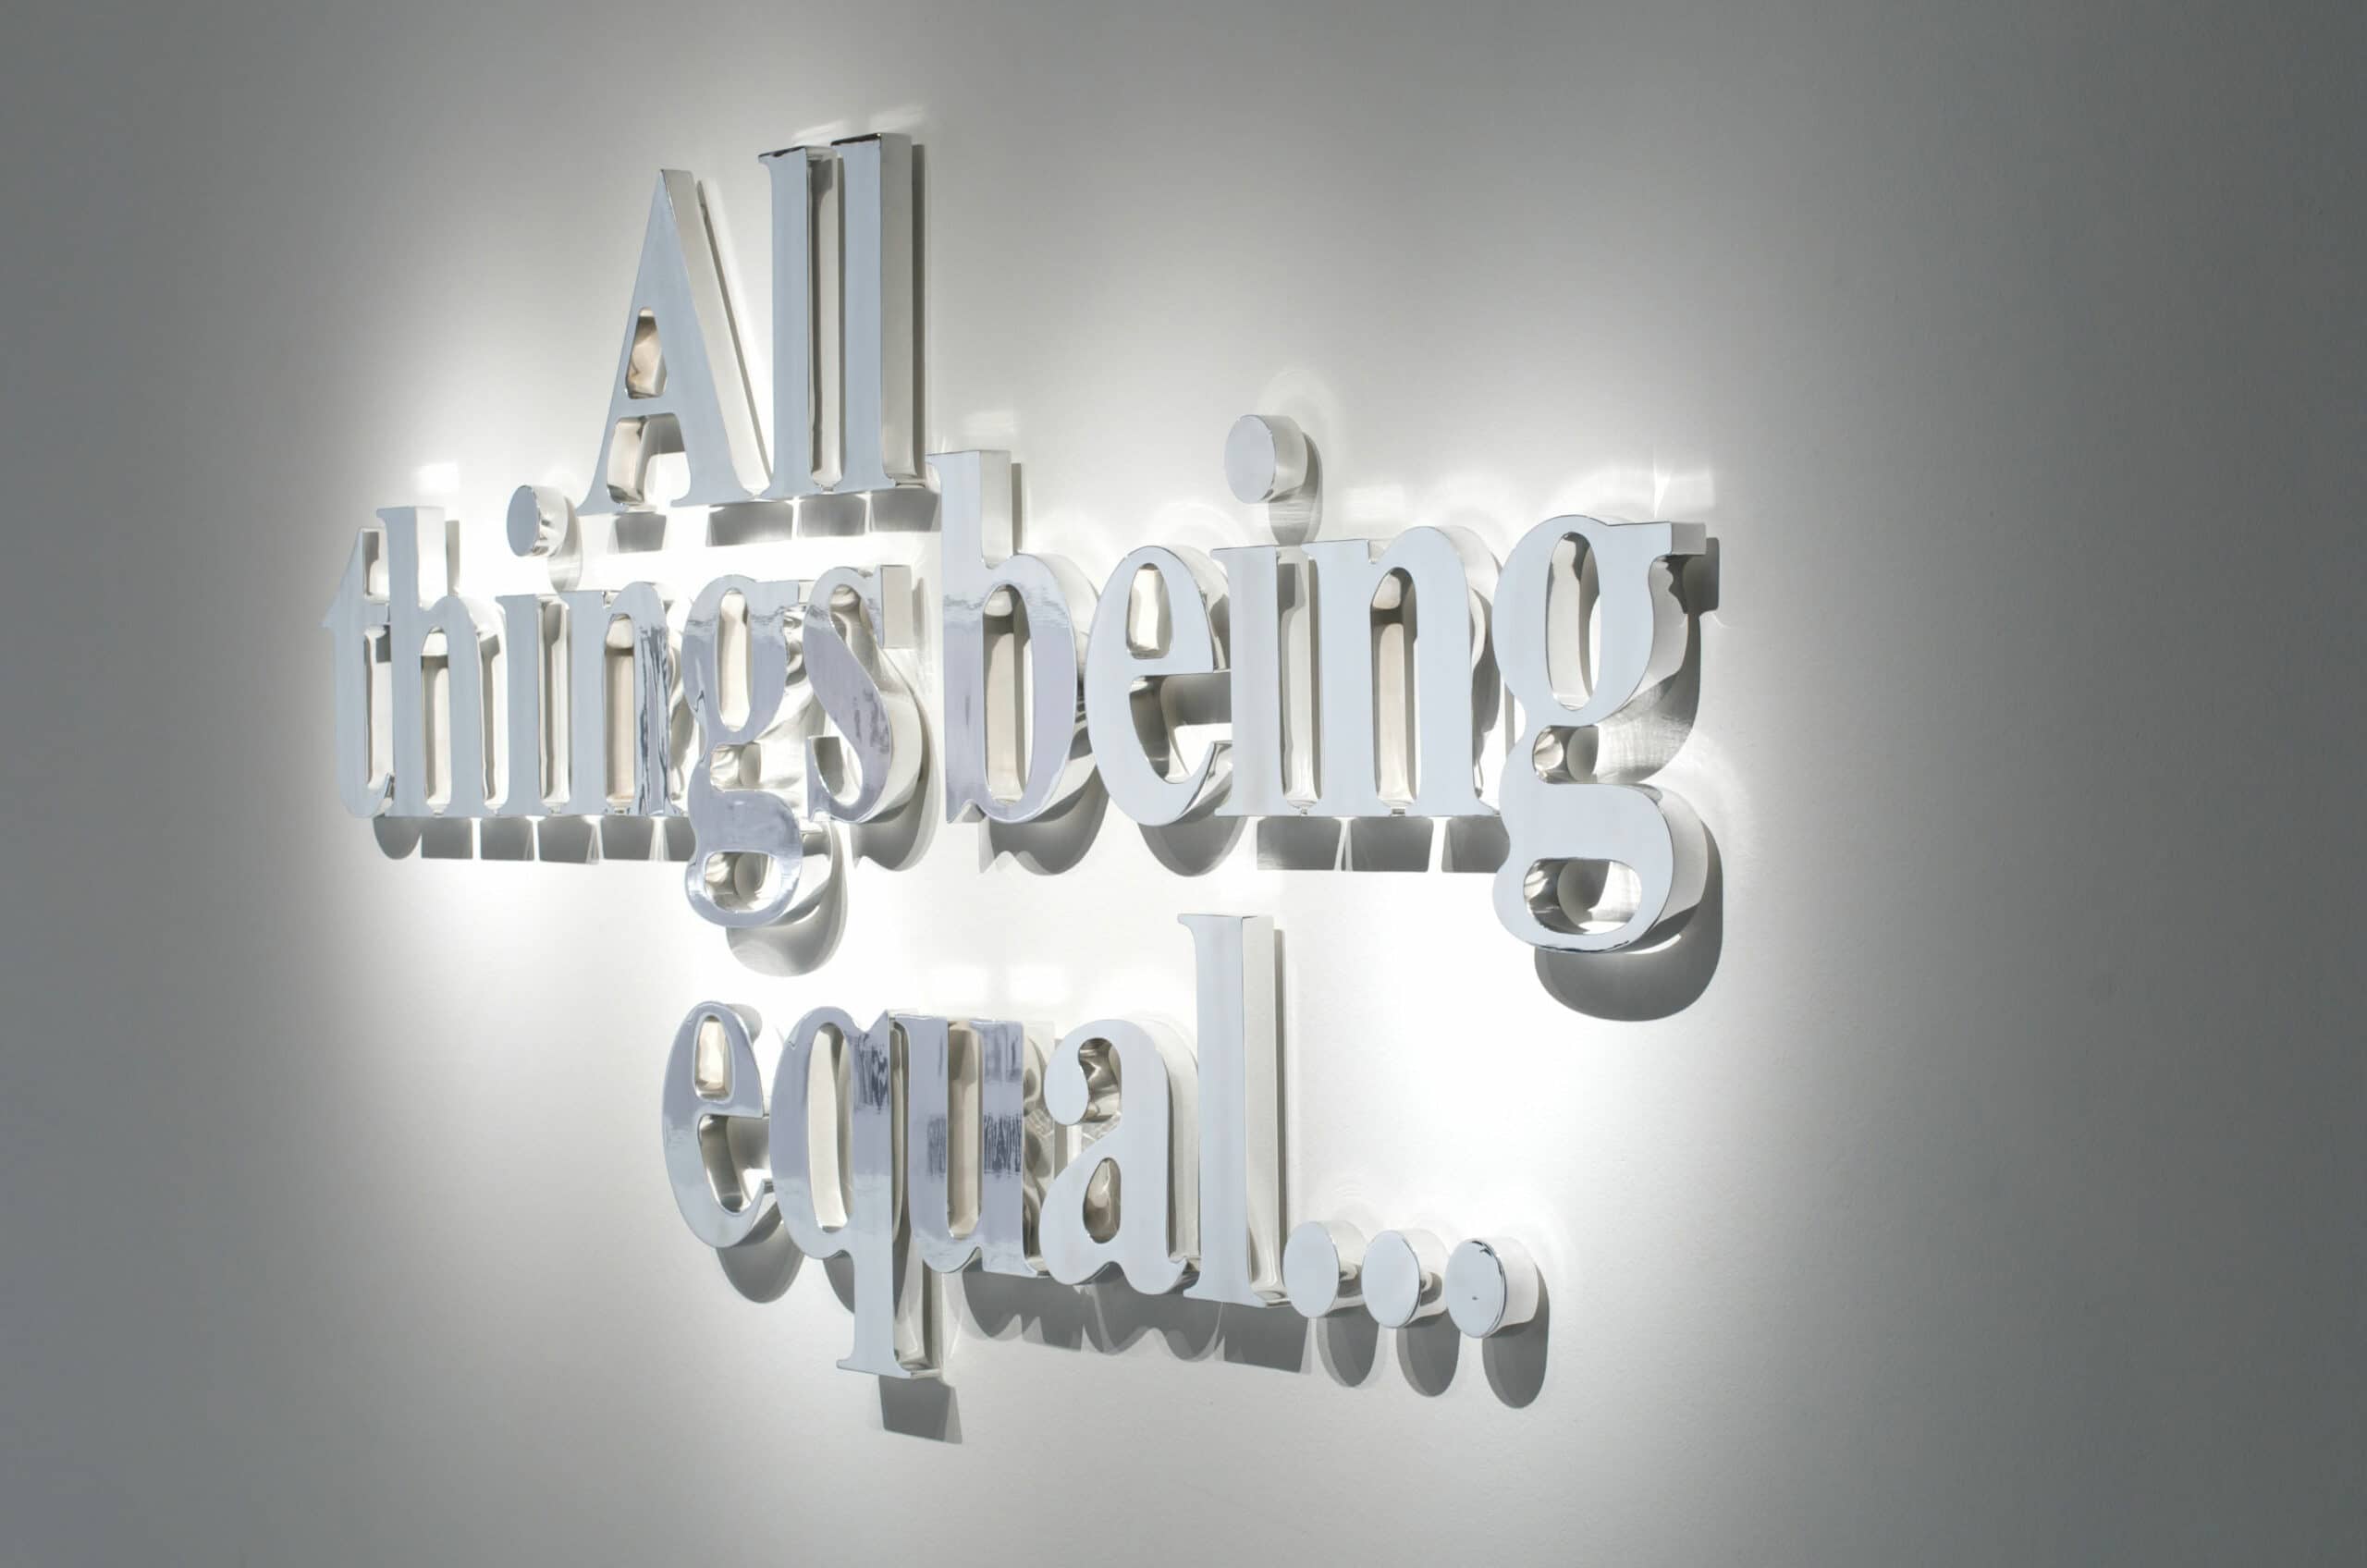 1106Hank Willis Thomas. All. things being equal… 2010. Aluminum. 104 x 194 x 3 cm.